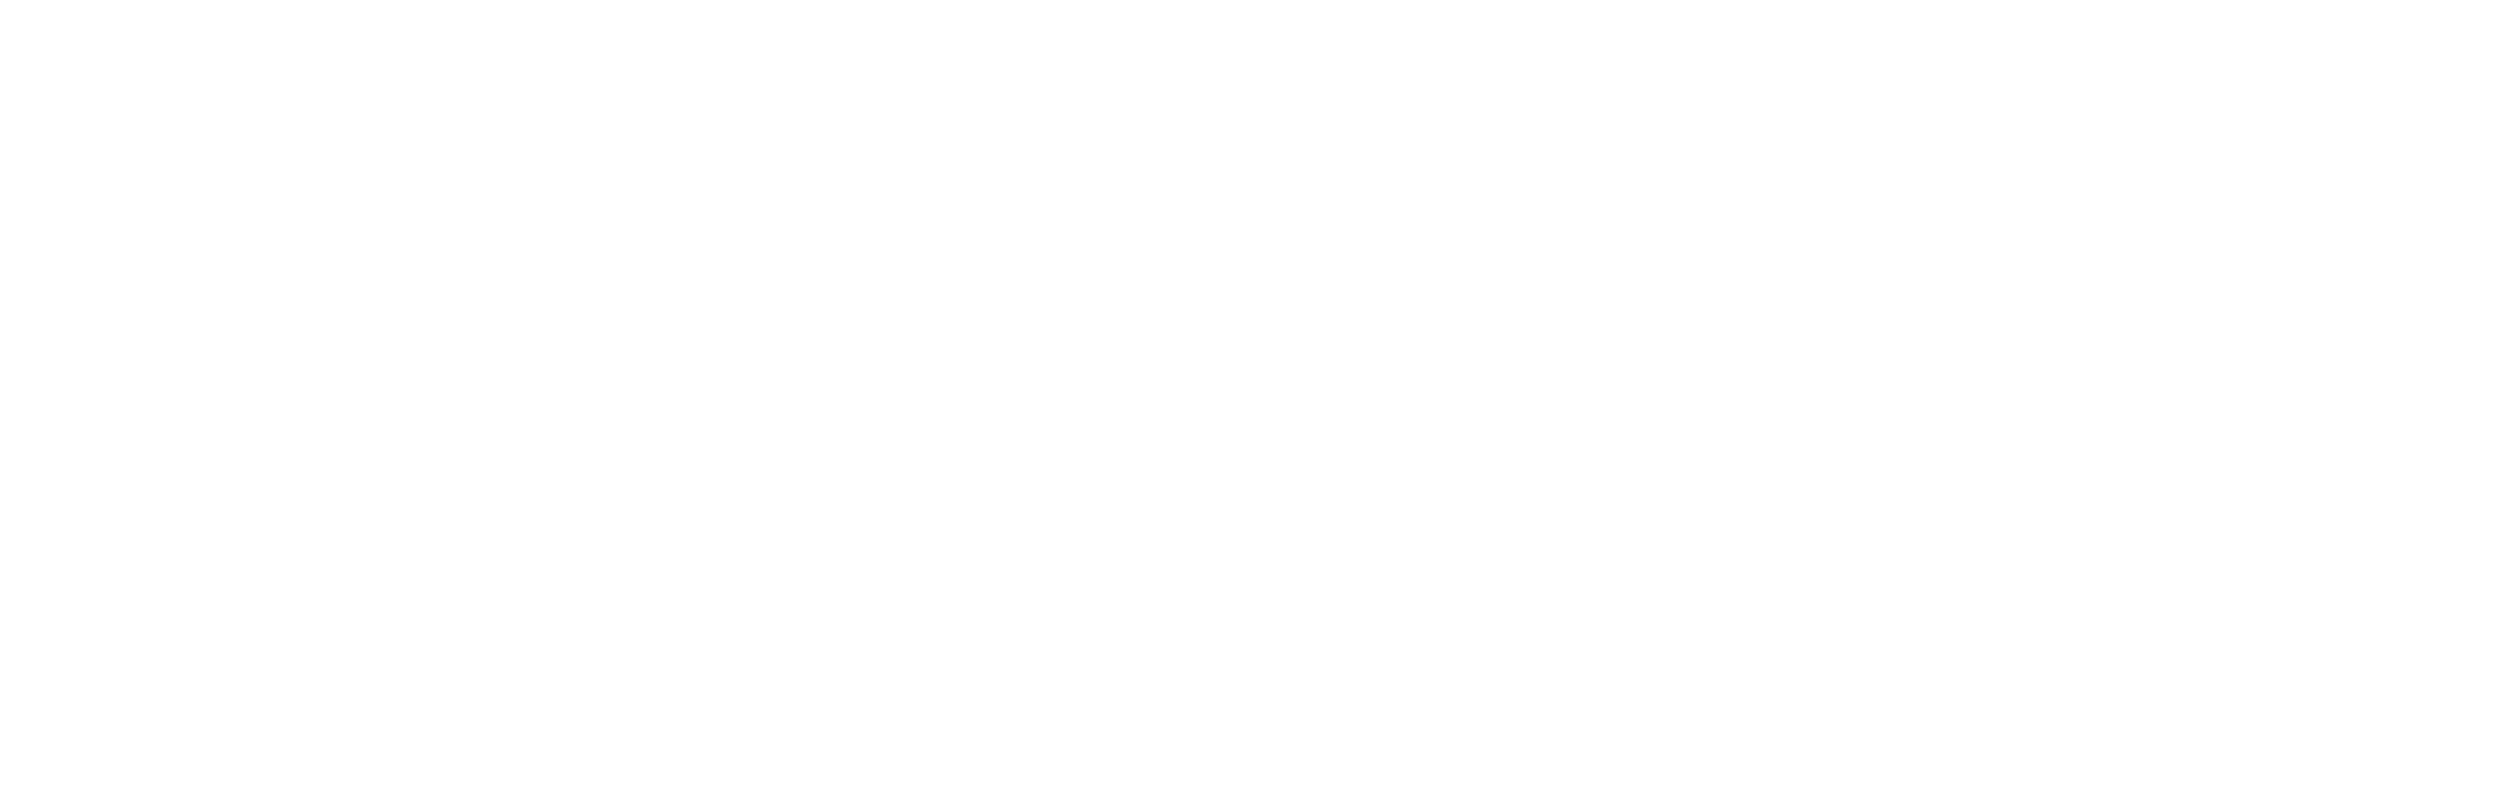 vice_logo.png